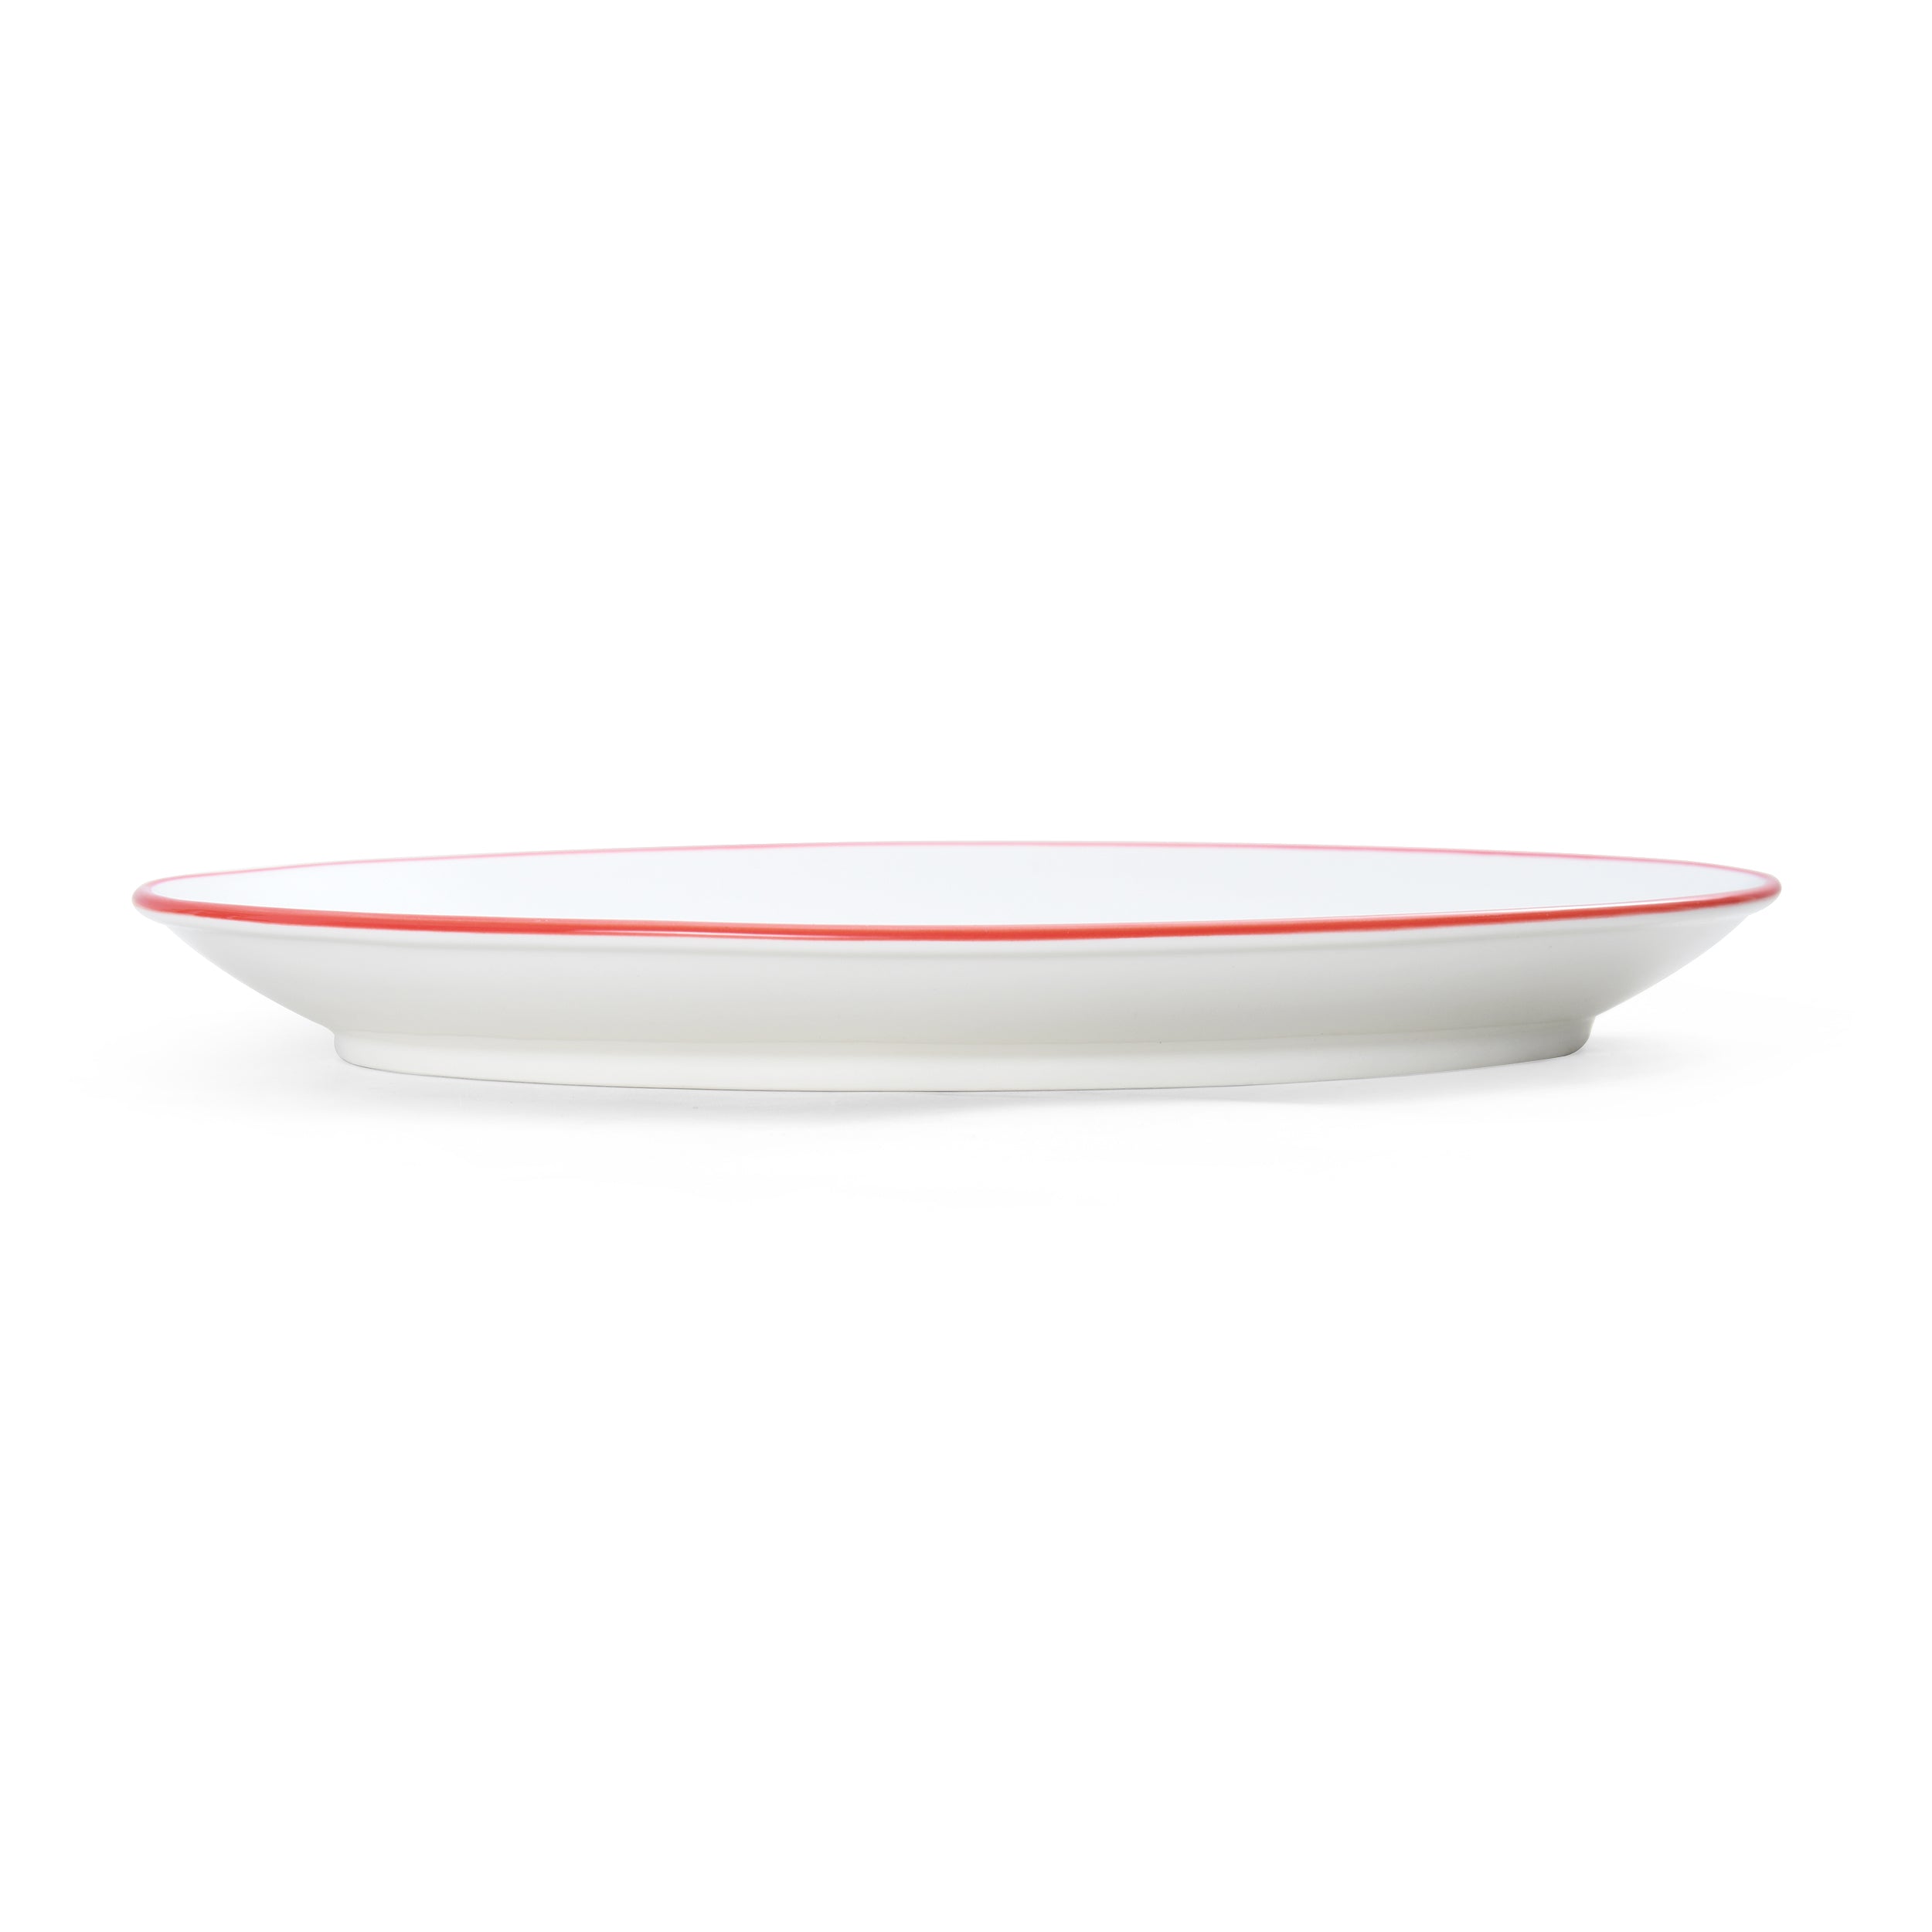 Bistro Pinstripe Porcelain Oval Platter 11x7" Red Pinstripe #color_red pinstripe